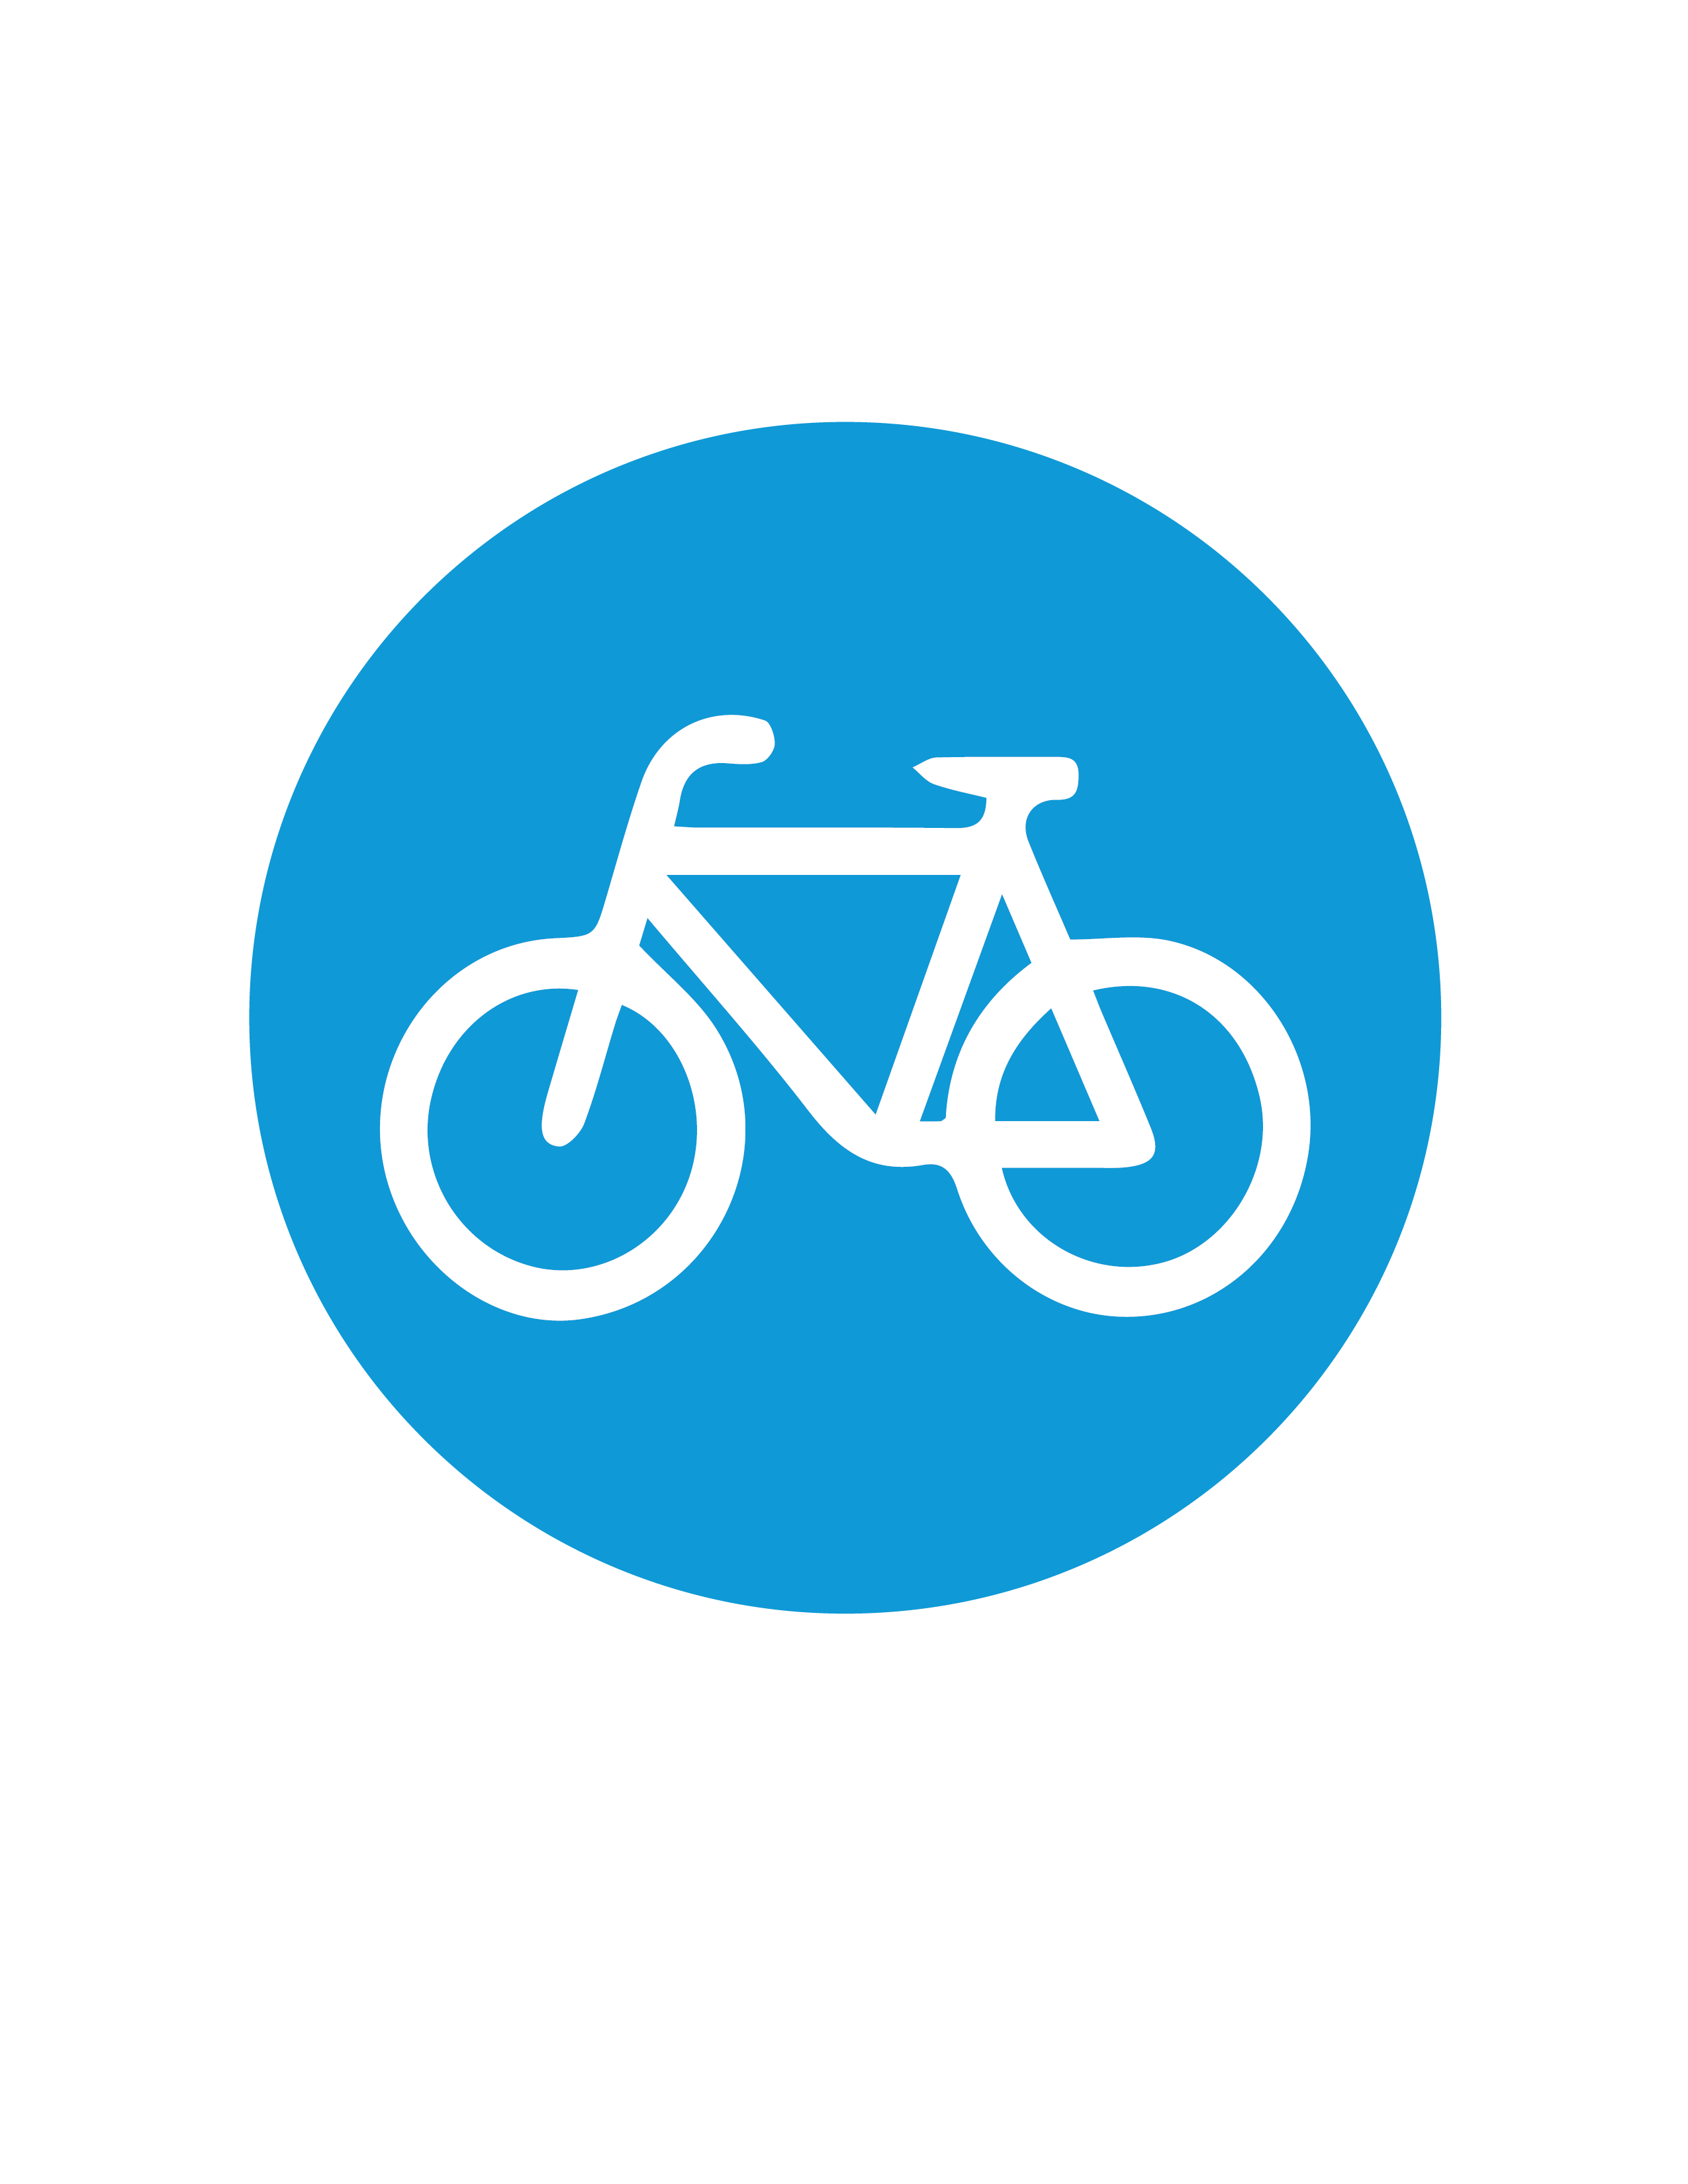 Bicycle Transportation